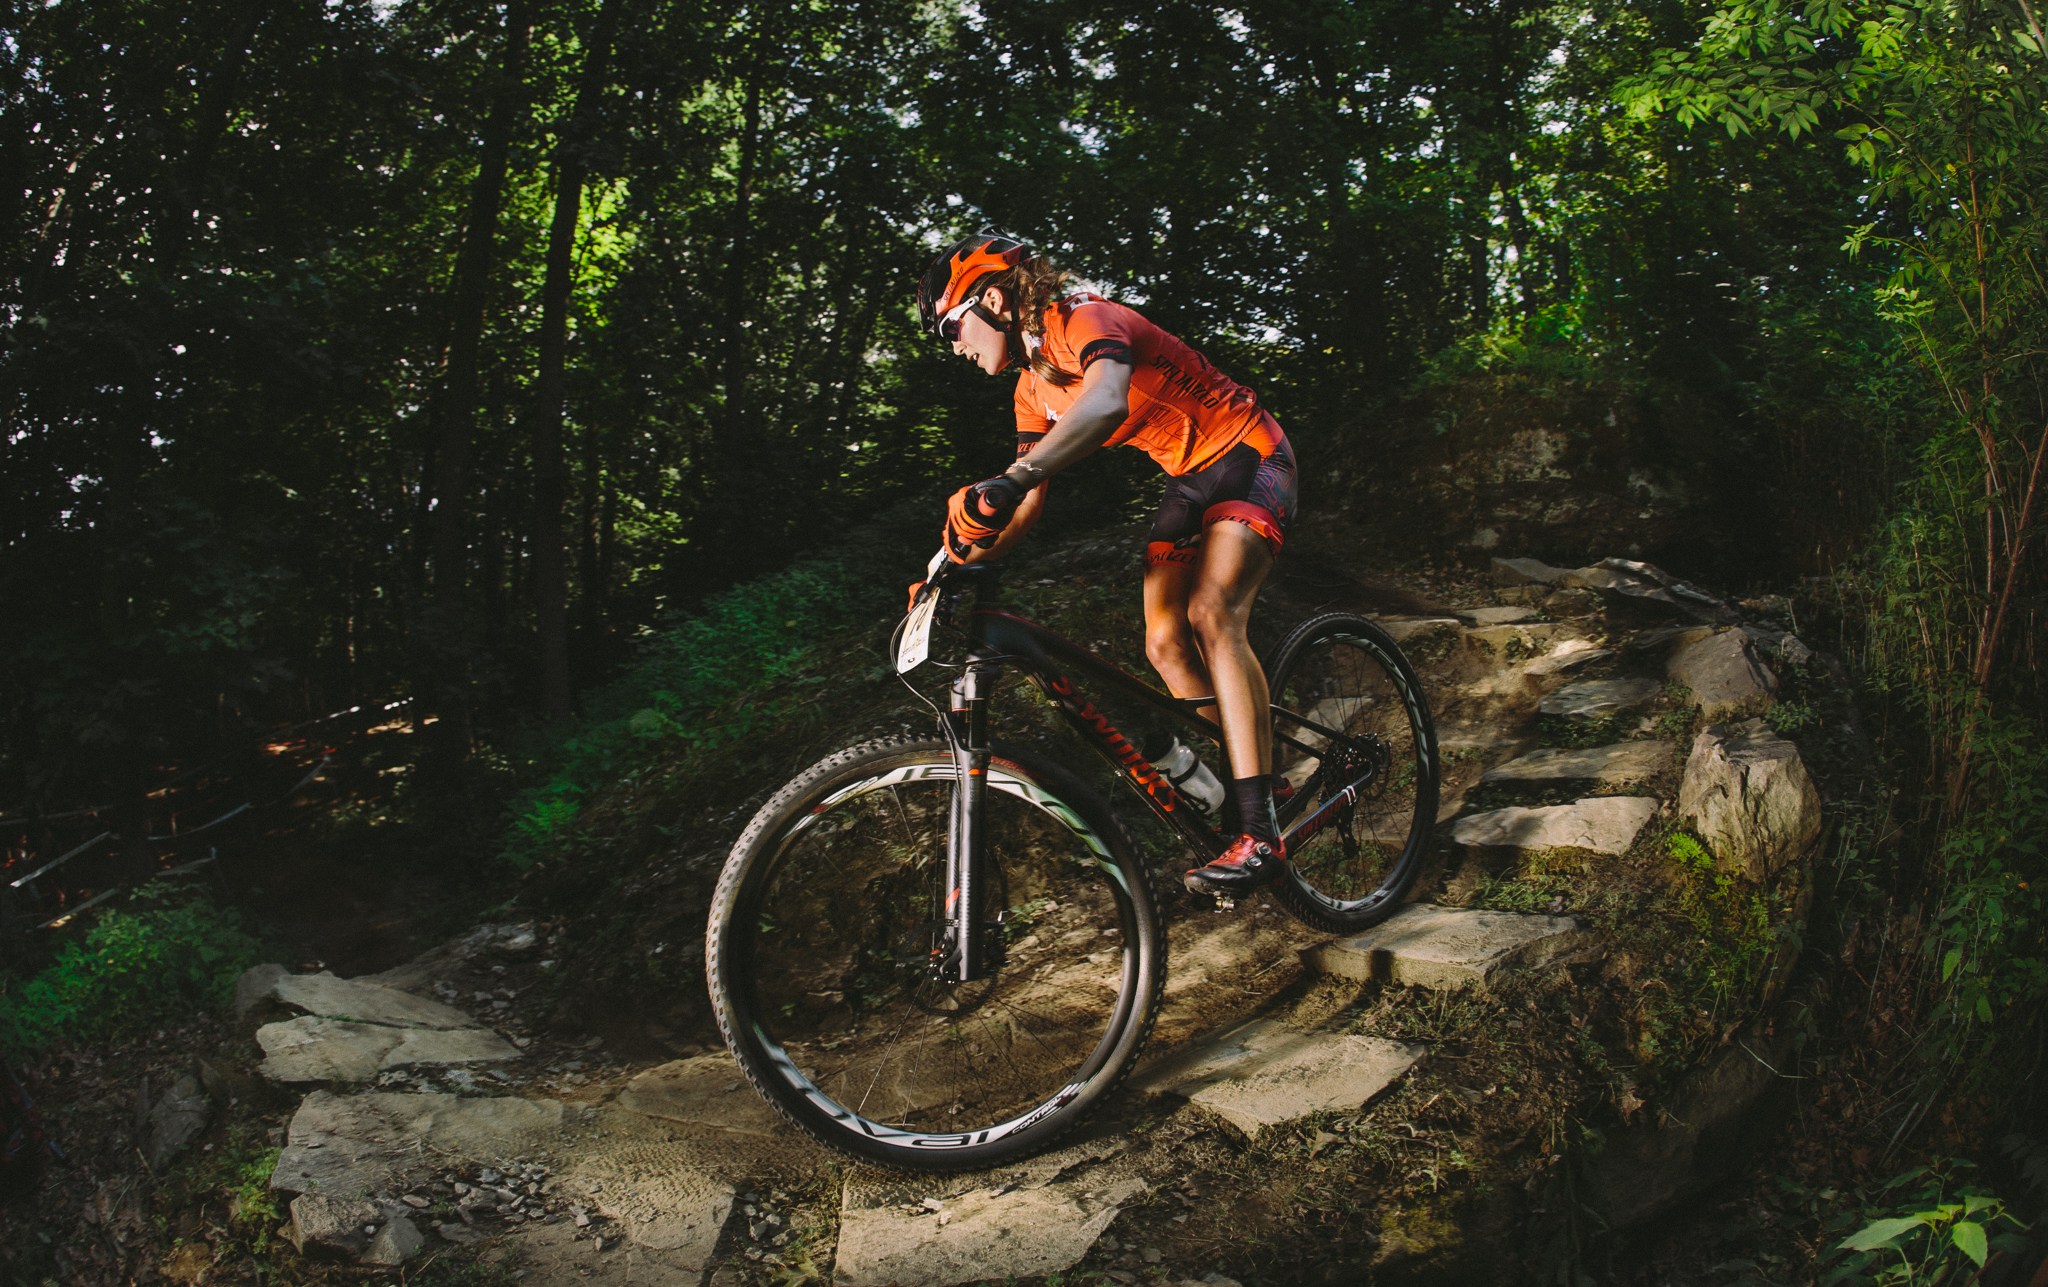 Coppola Photography - CT Adventure Commercial Photographer mountain biking Athlete on location portrait creative lighting Kate Courtney Specialized Mountain Bike Vermont Photographer